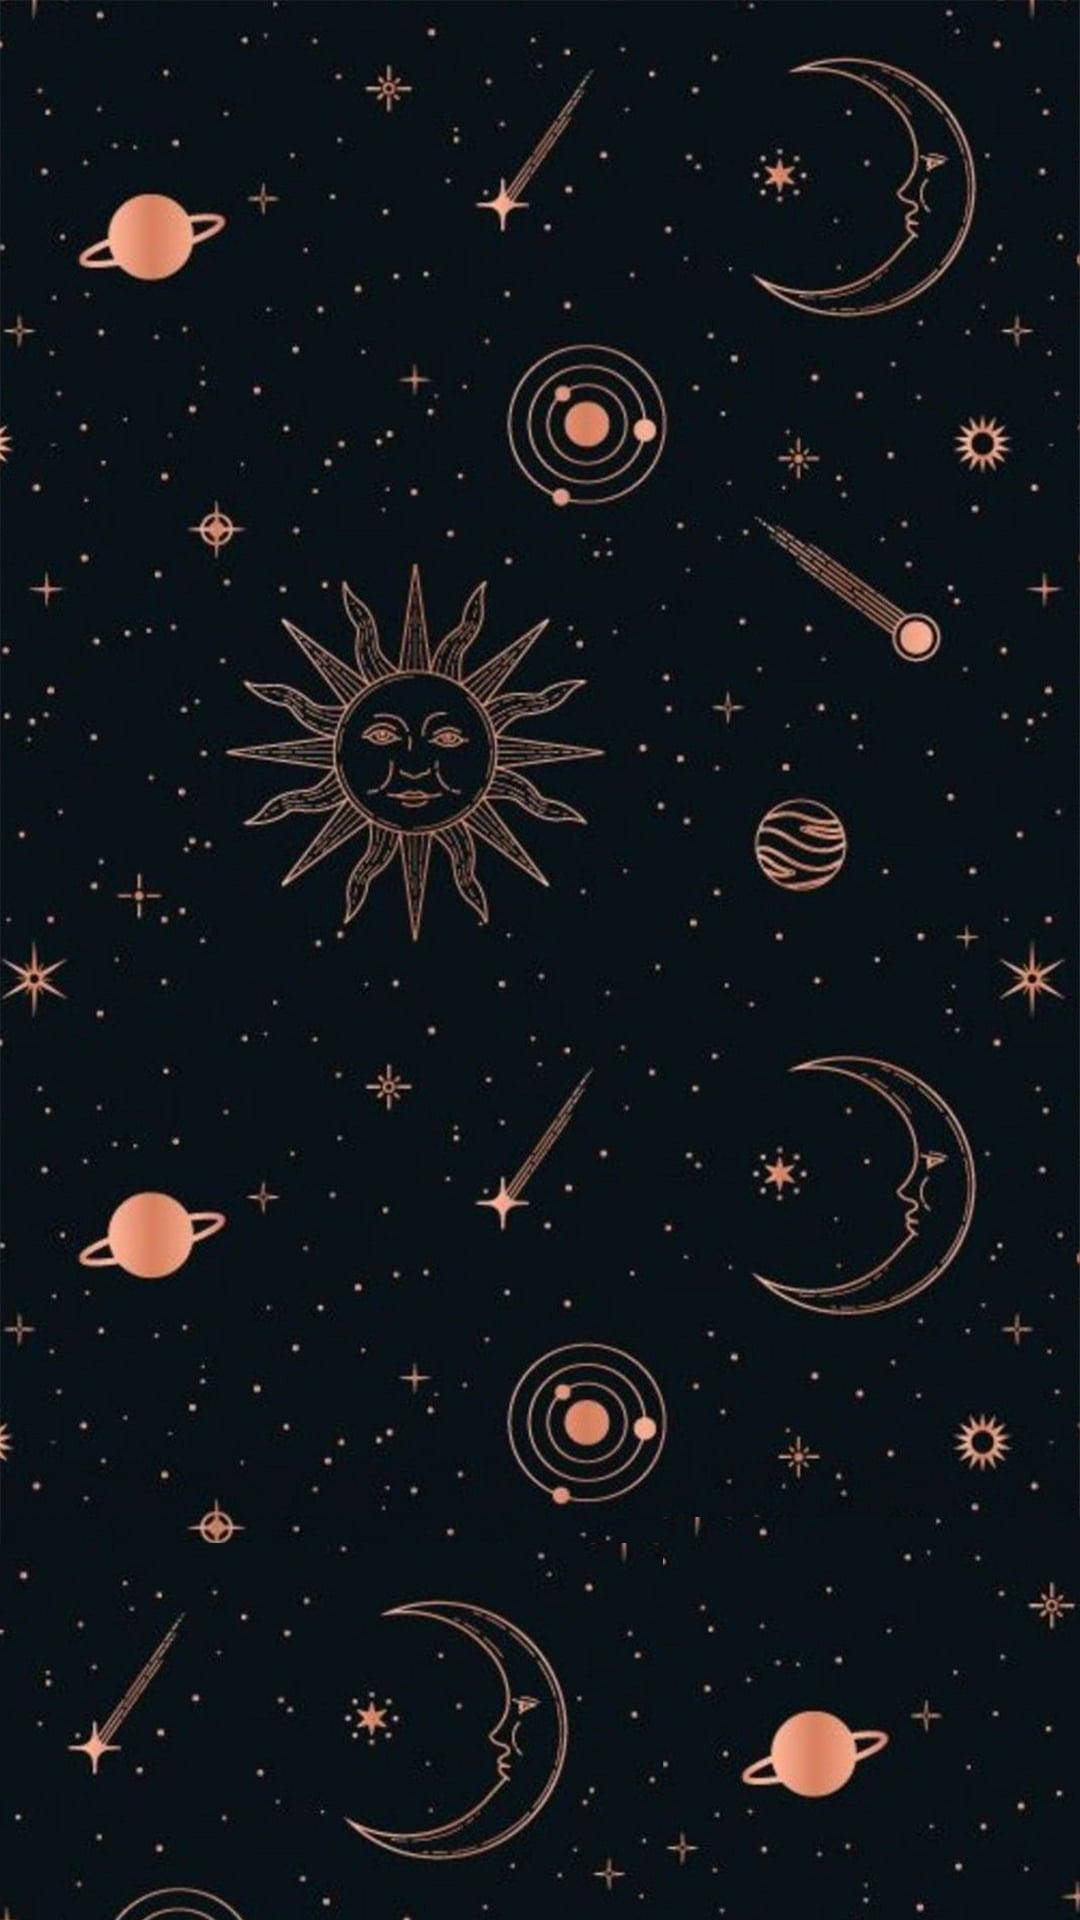 Cosmos Aesthetic Sketches Wallpaper